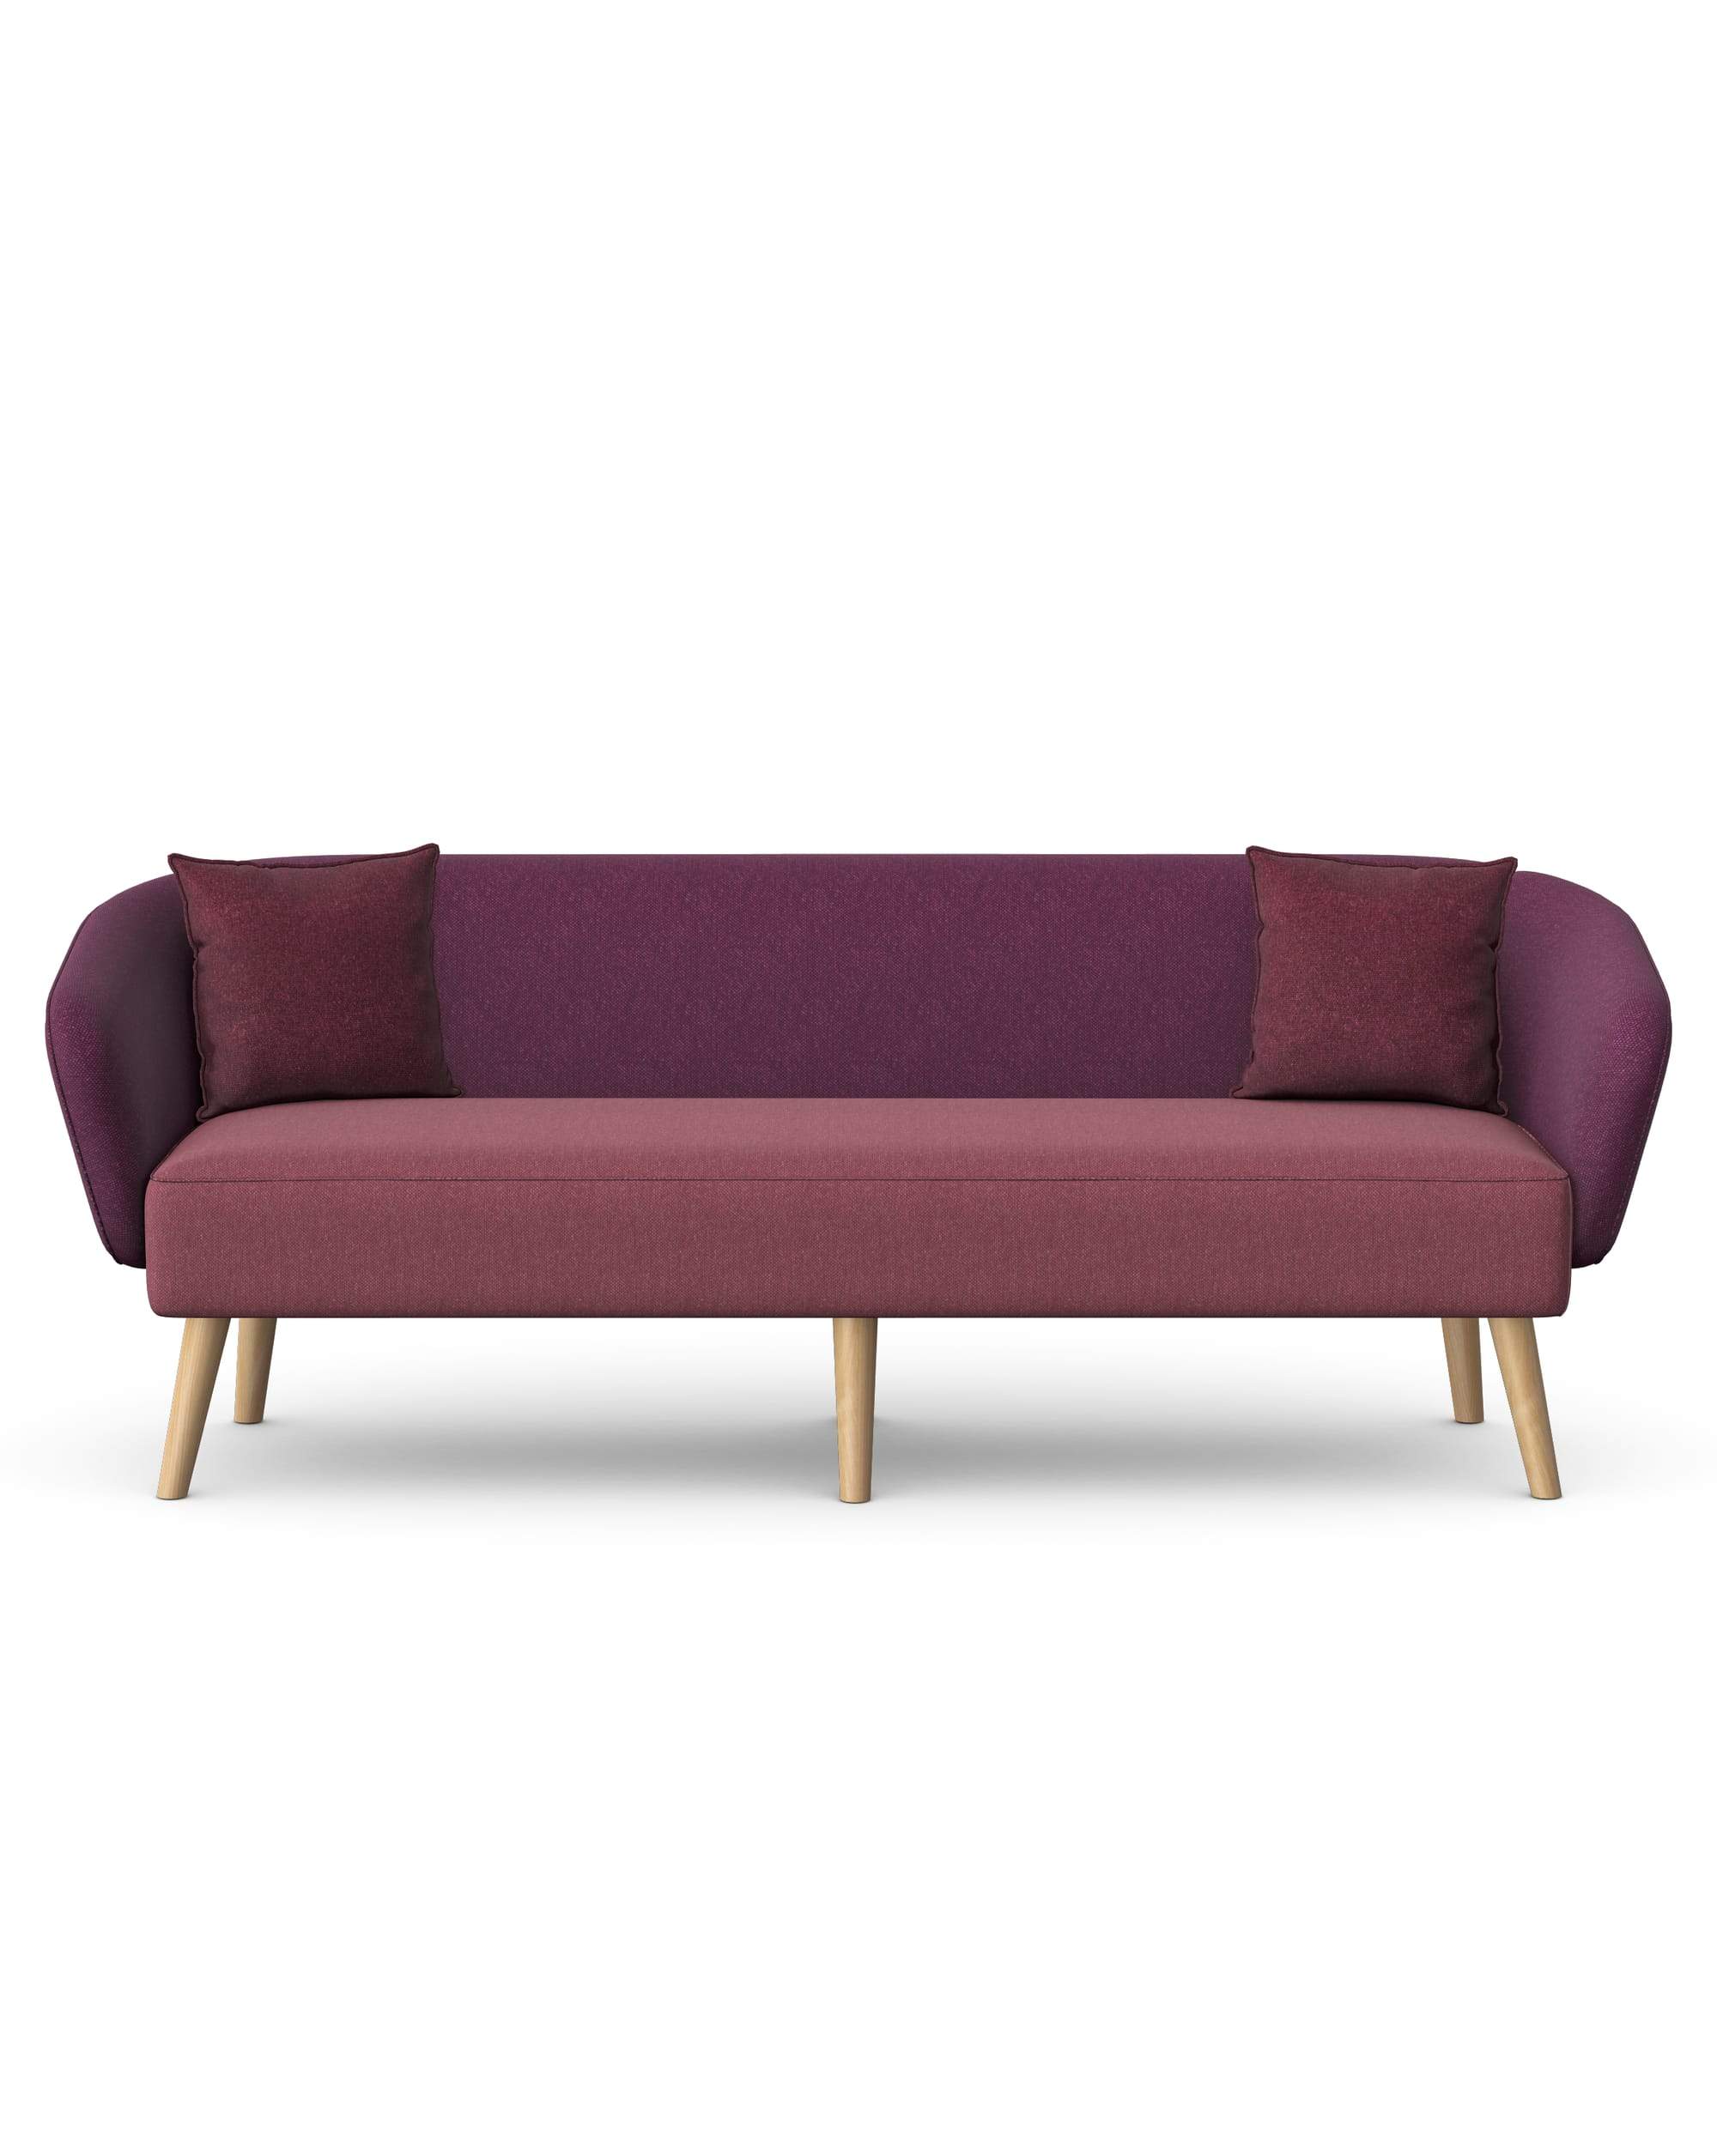 ASPECT - Three Seat Sofa, Wooden Legs